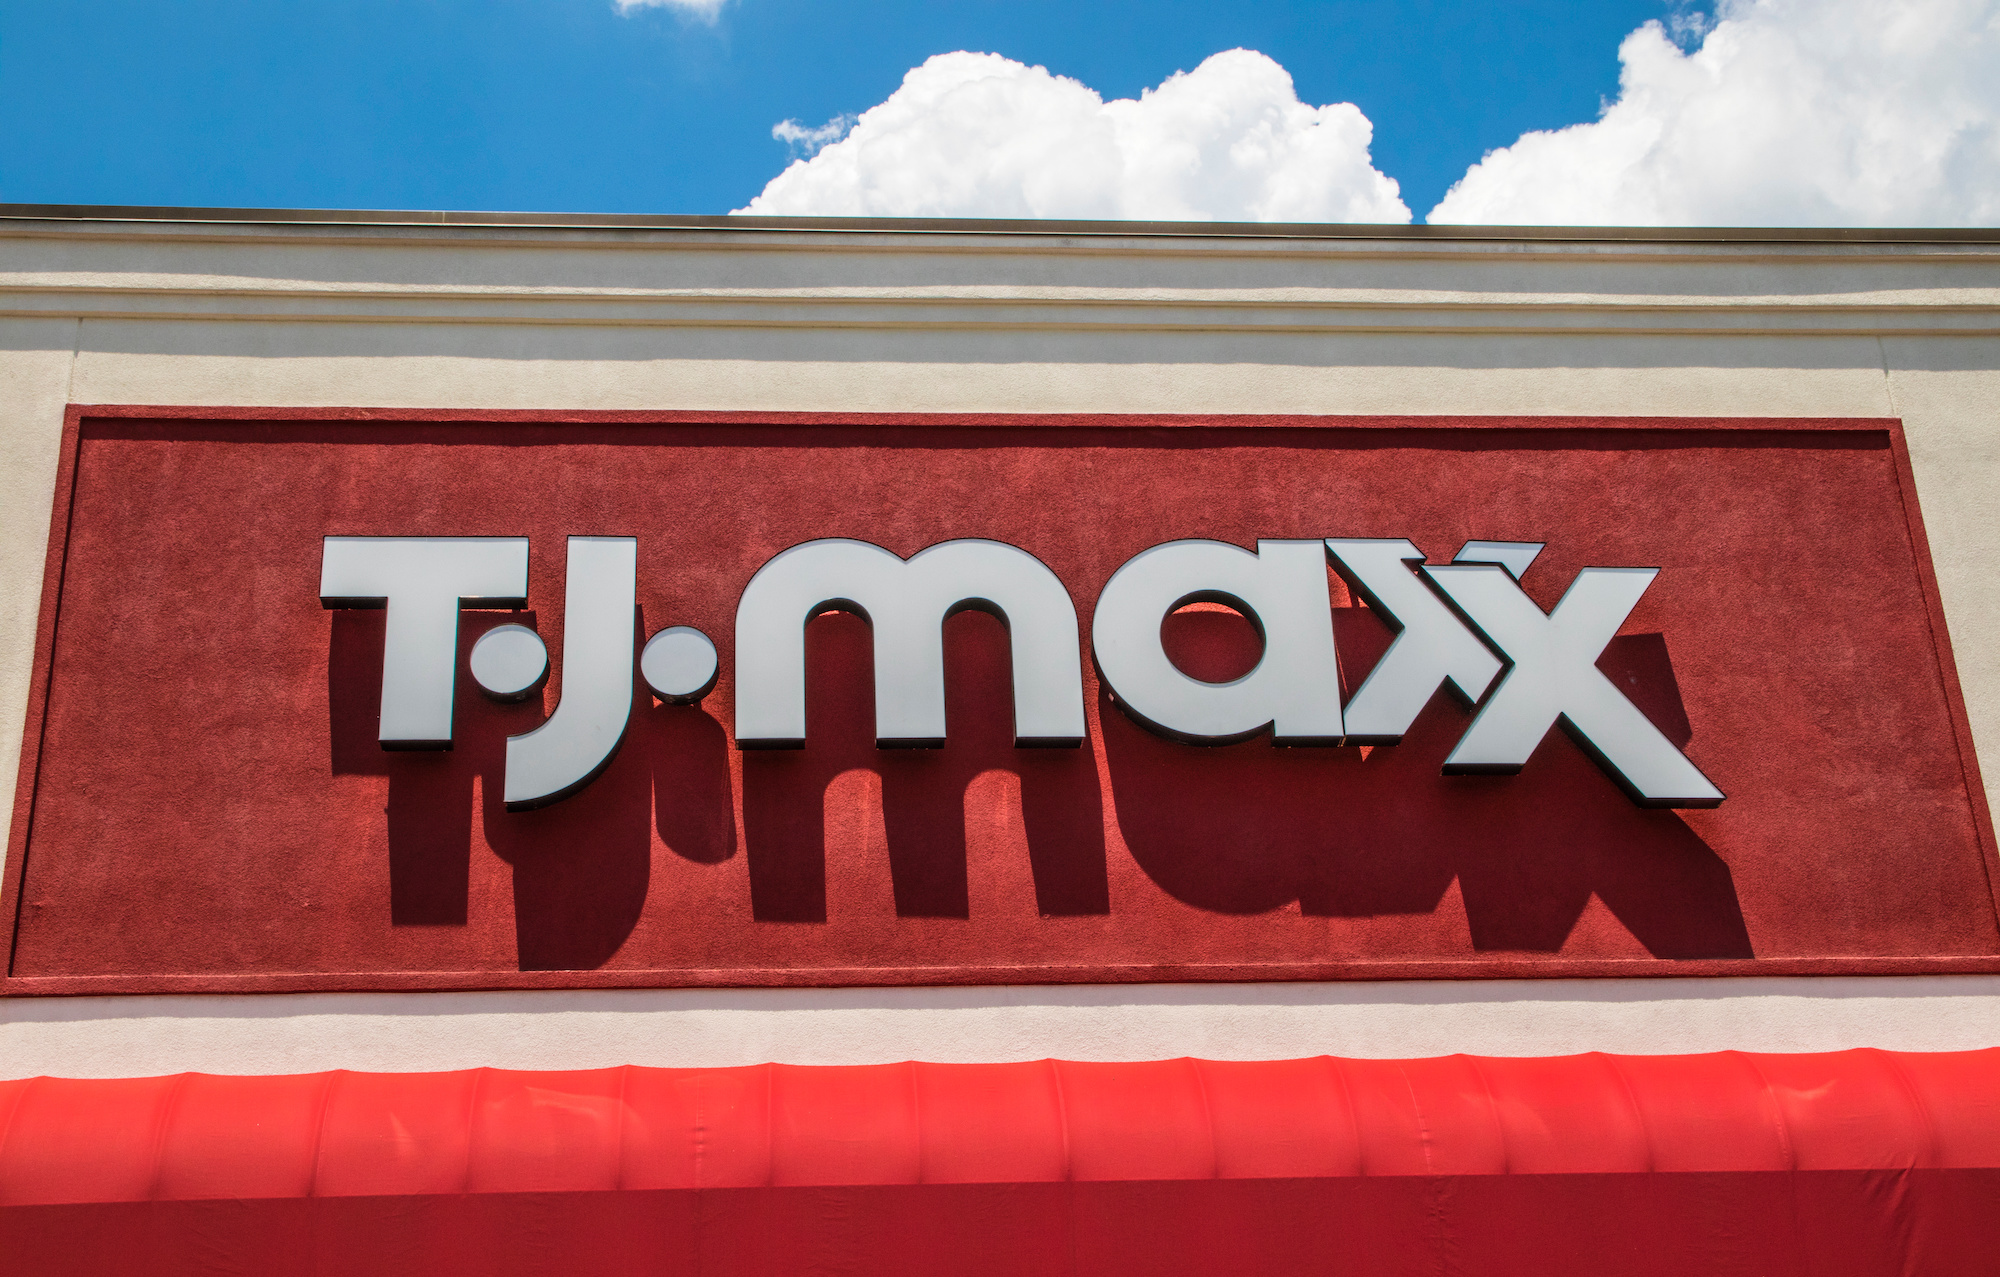 T.J.Maxx to open Fallon store on Sept. 17